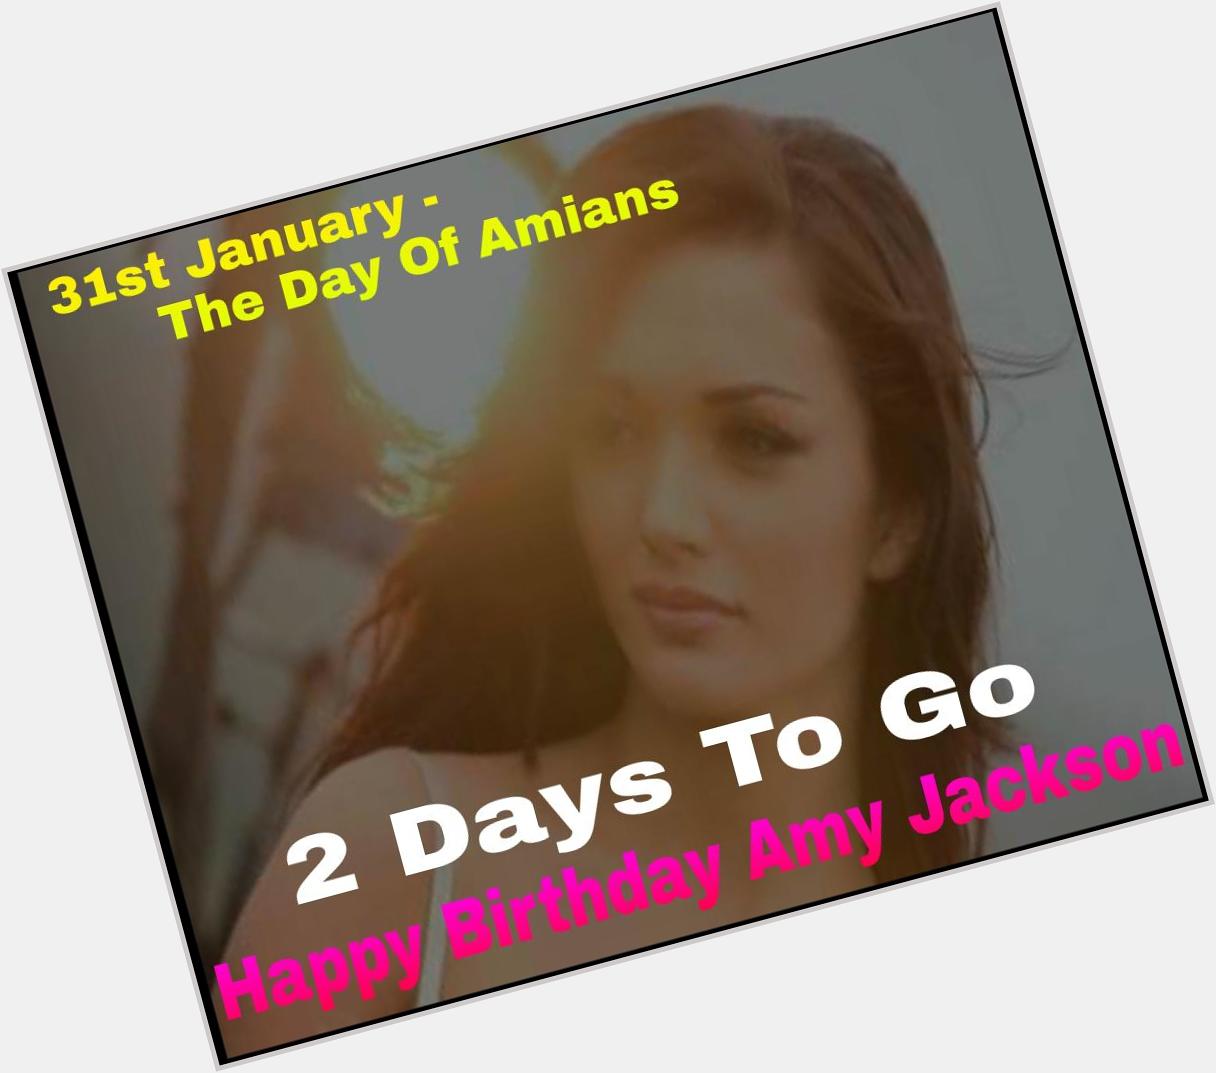 Its 2 Days To Go Now For Amy\s Birthday  Countdown Begins Happy Birthday Amy Jackson ! 